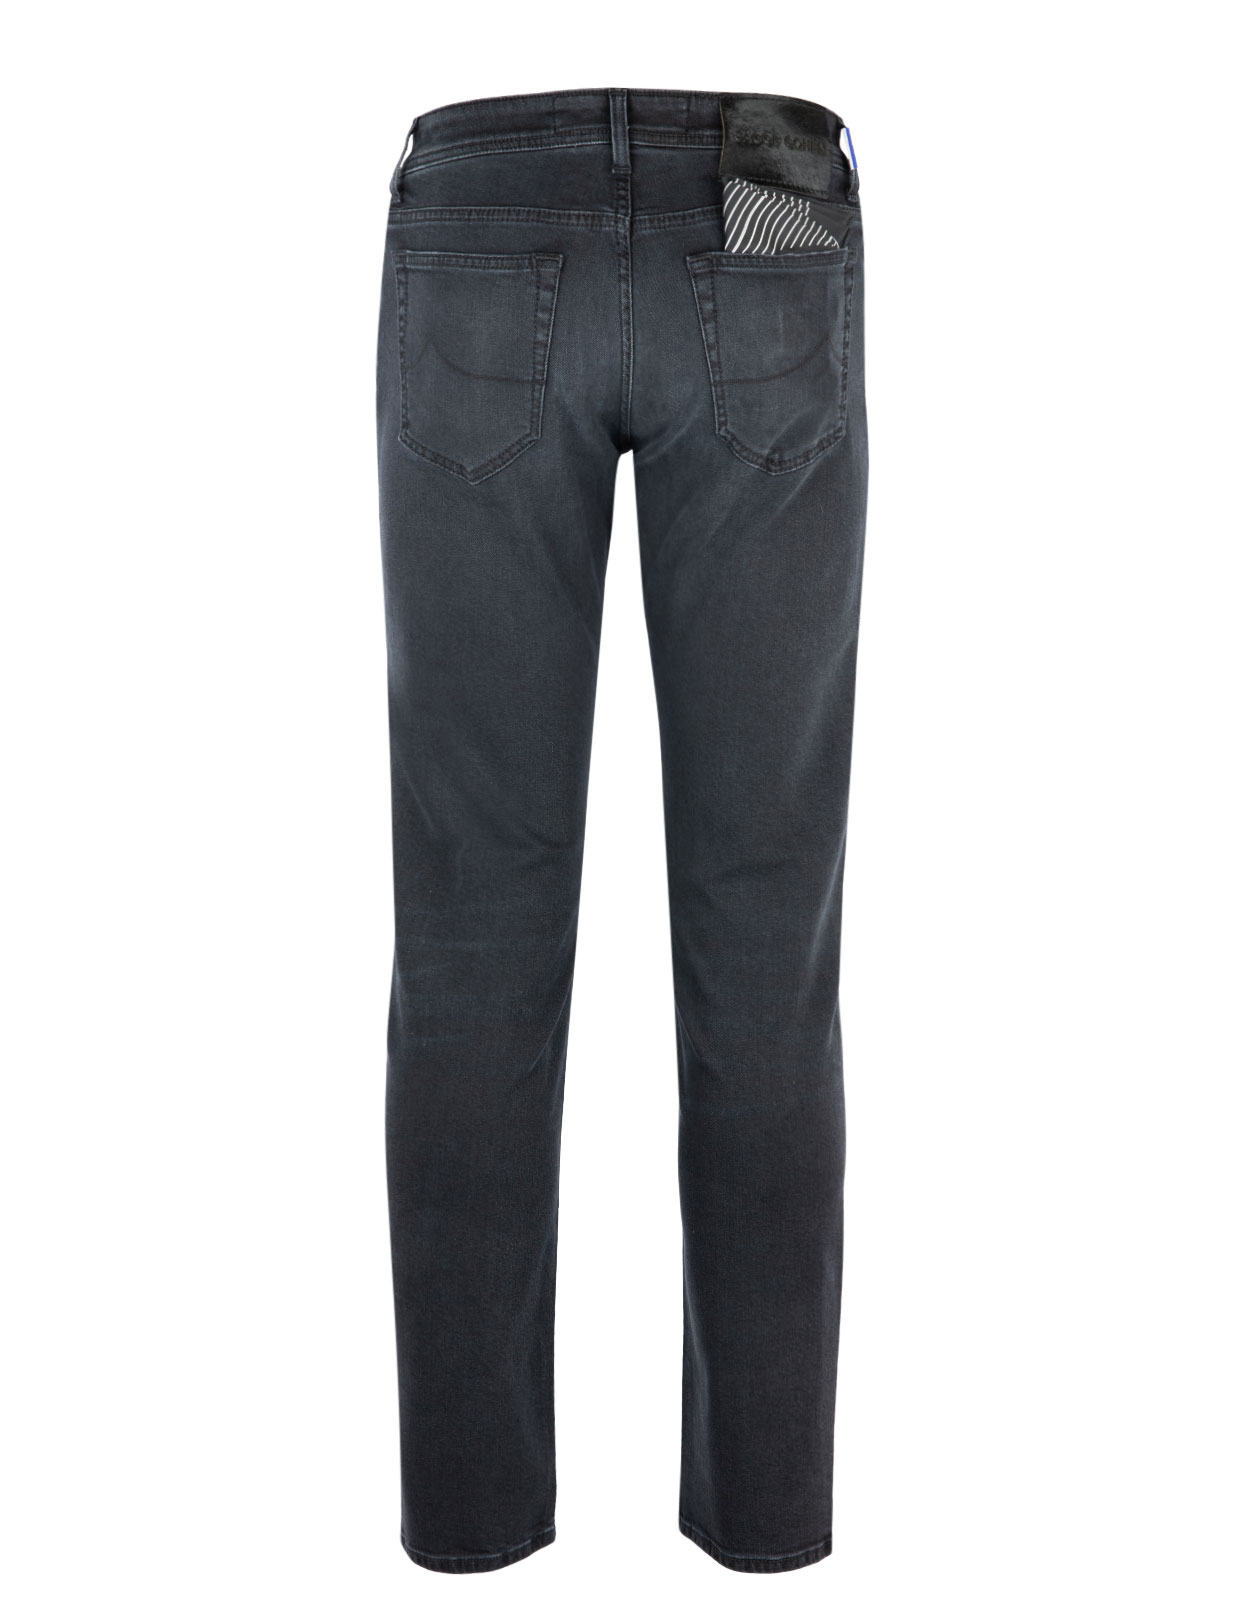 Bard J688 Jeans Denim Stretch Used Black